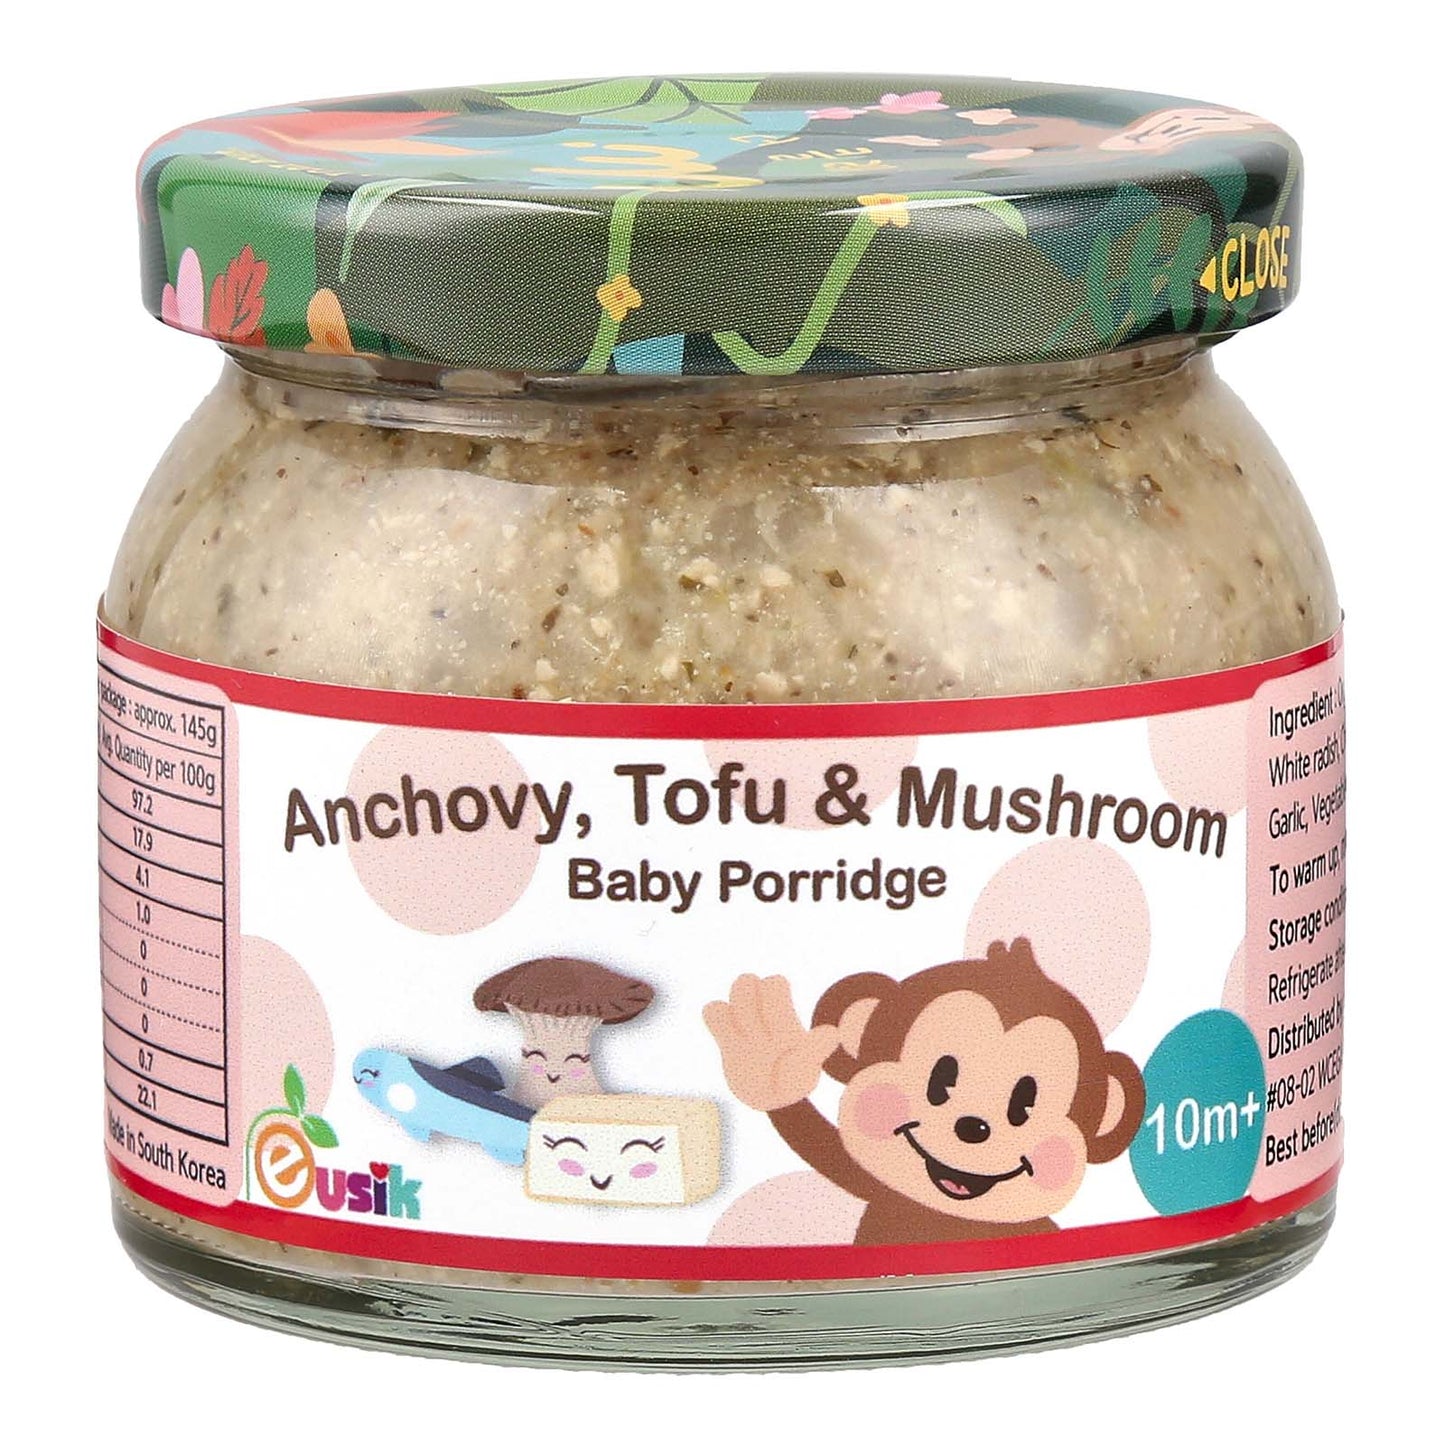 Eusik - 8-Pk Baby Rice Porridge Bundle 10 Months+ (Assorted)